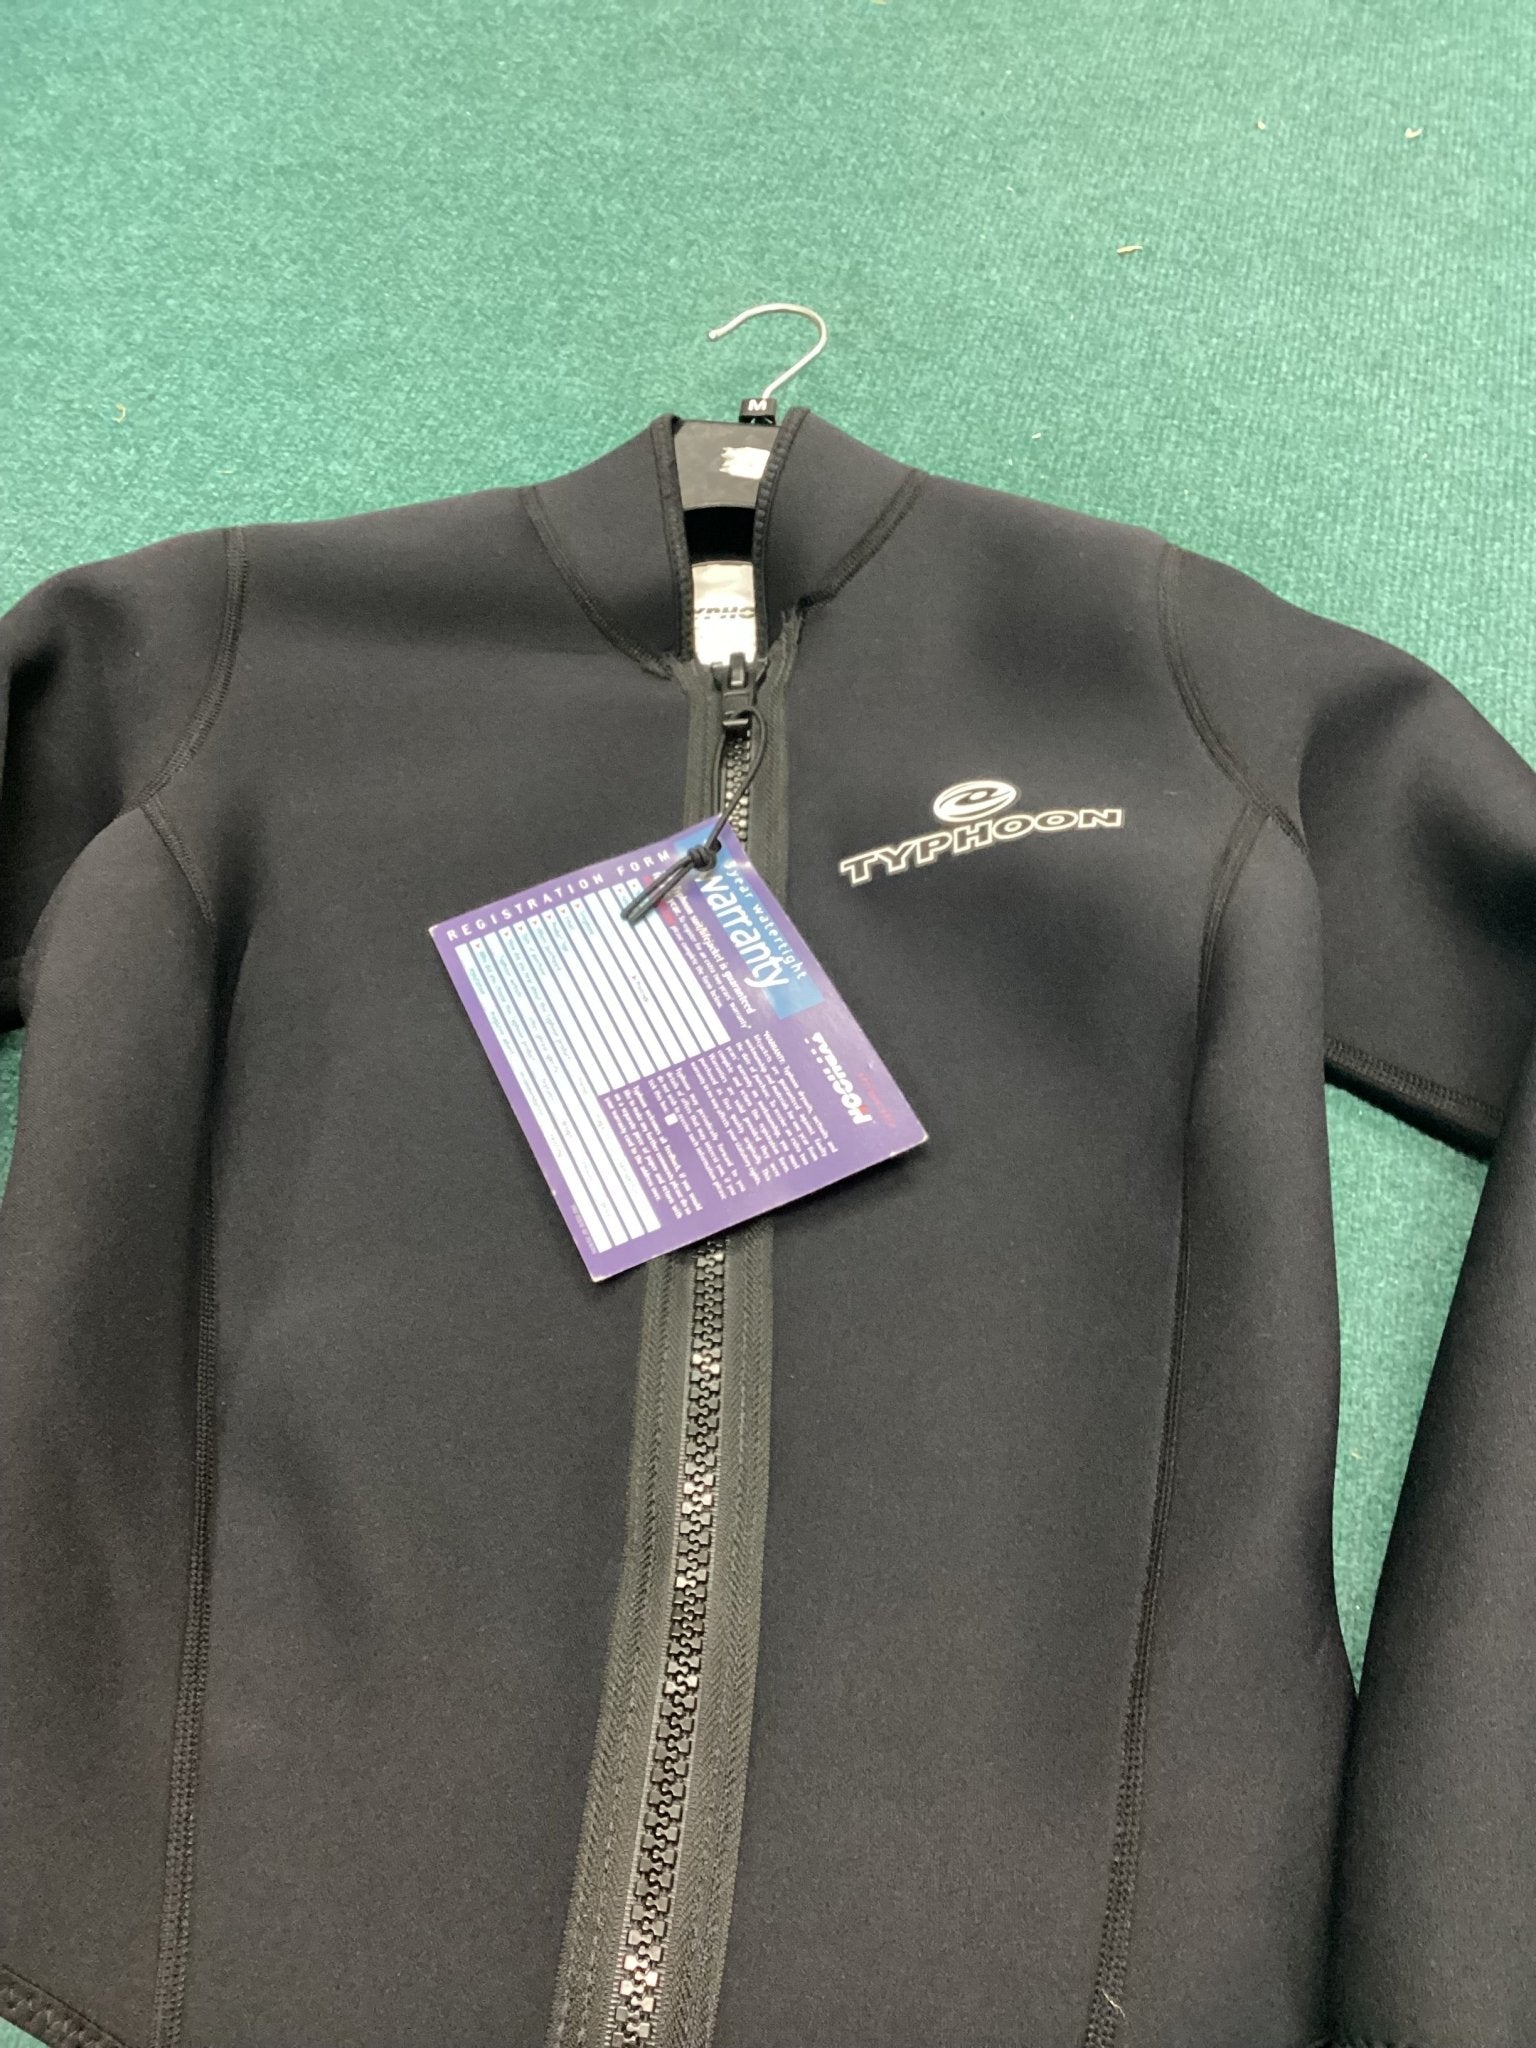 Typhoon XTS Pulse ladies wetsuit jacket black size medium - Worthing Watersports - Wetsuits - Typhoon